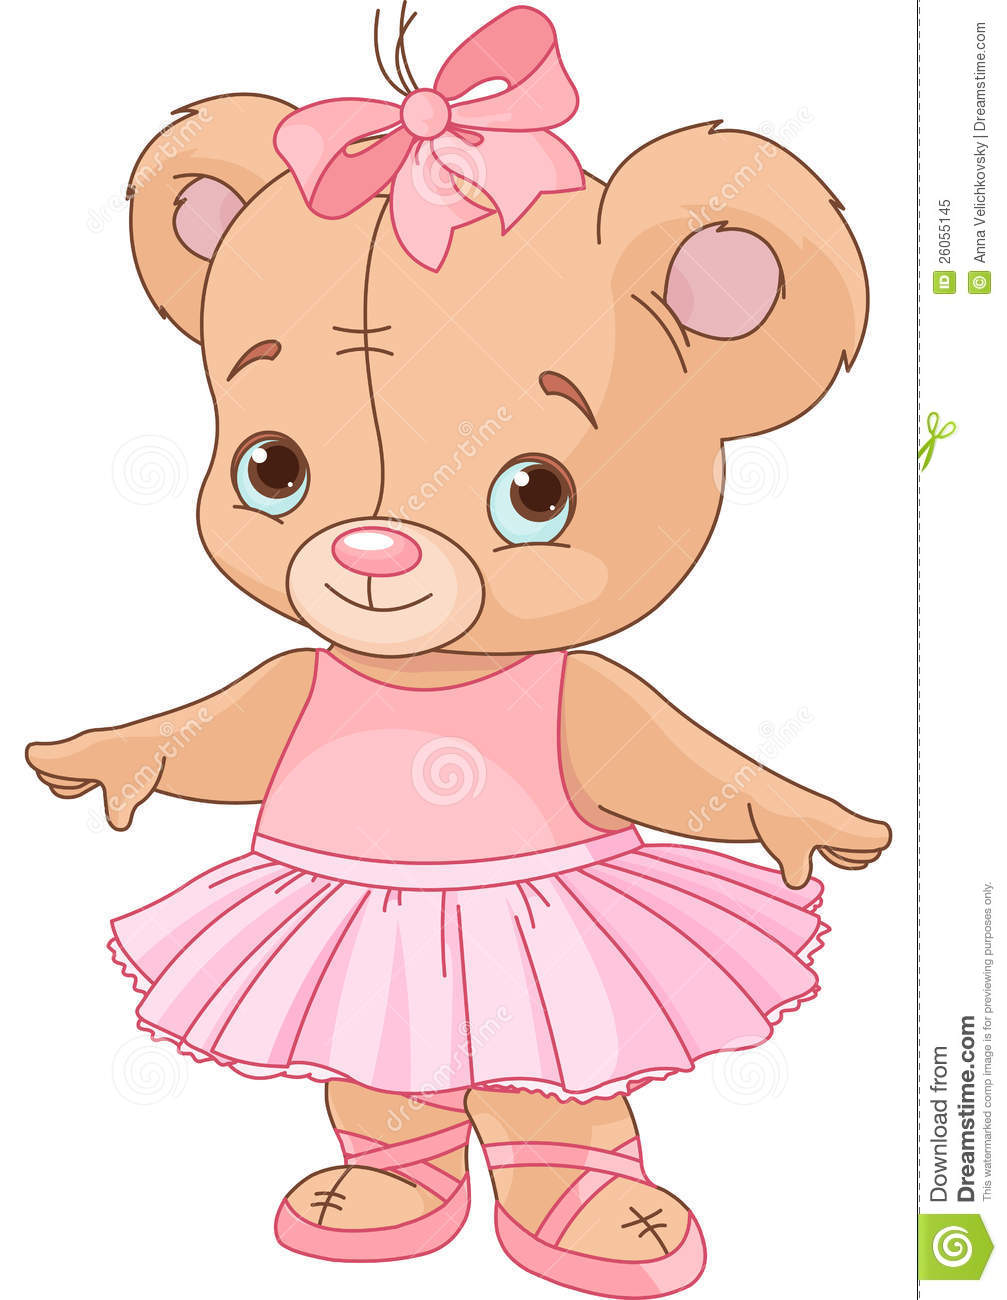 Cute Teddy Bear Ballerina Royalty Free Stock Photo   Image  26055145